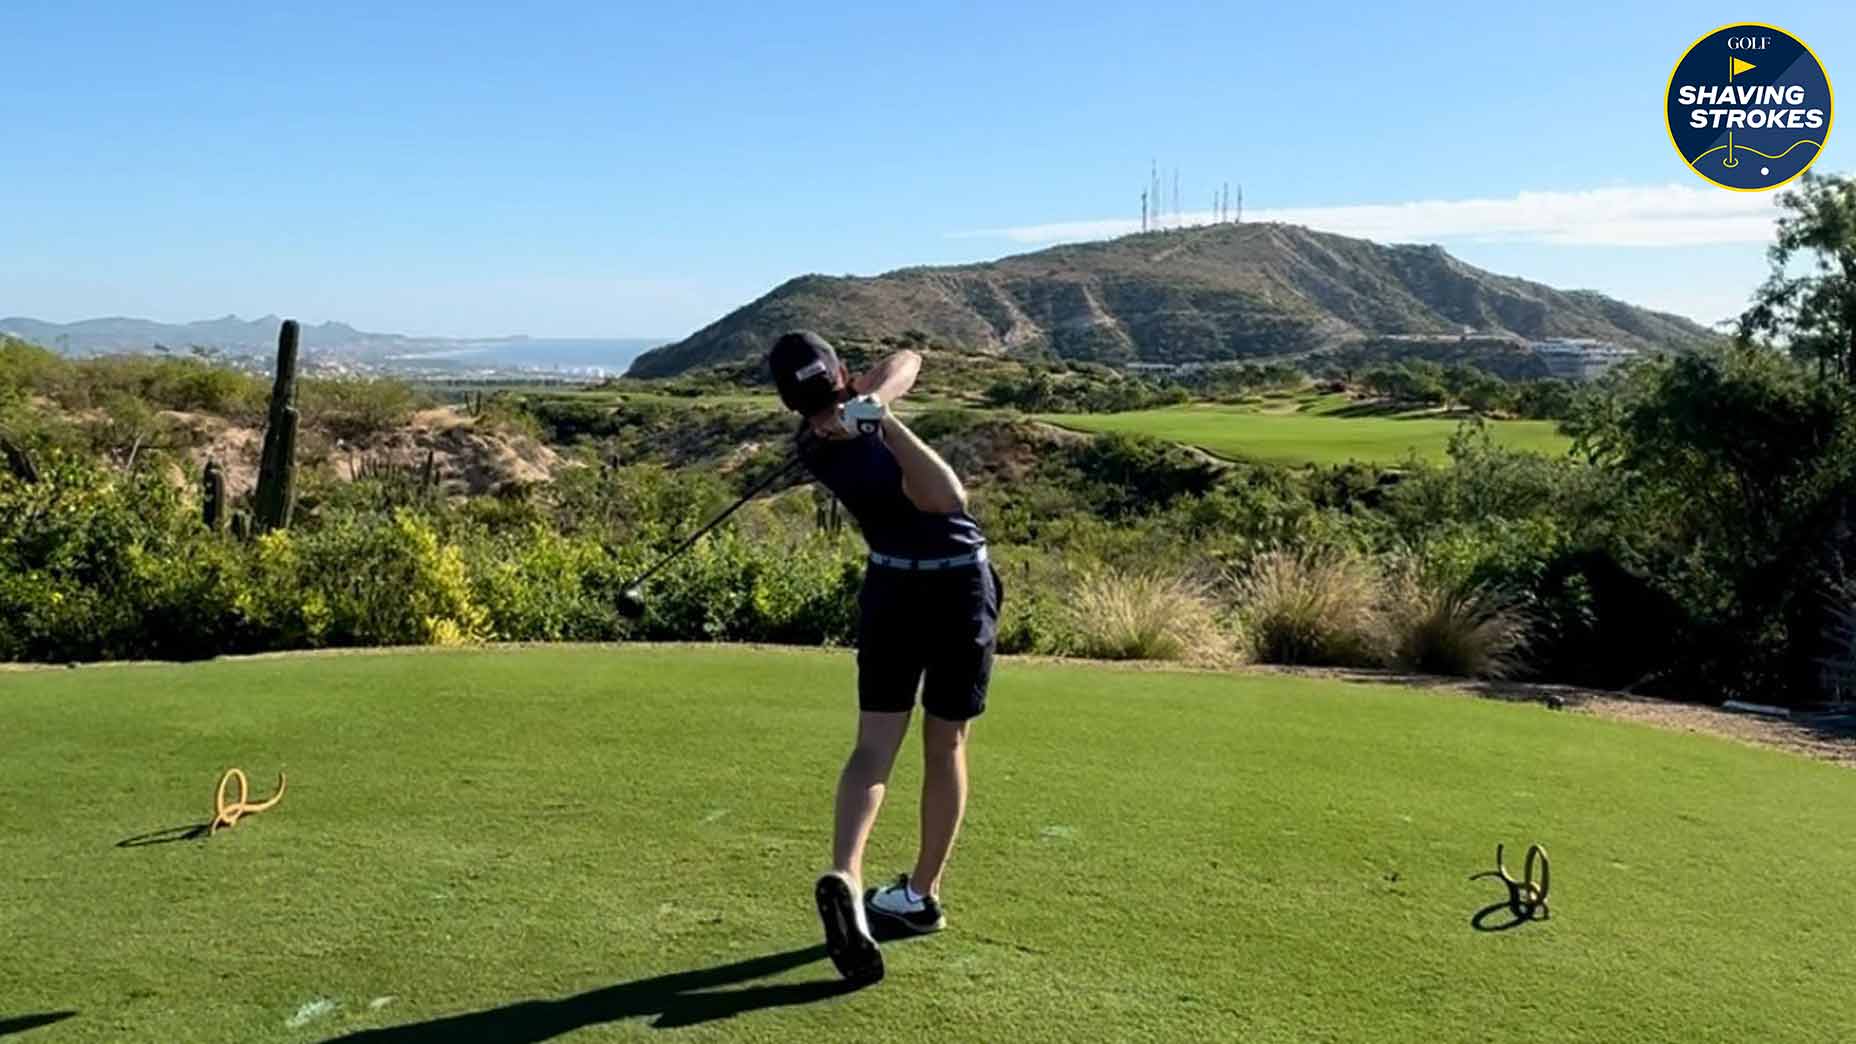 High School golfer hits drive on golf course